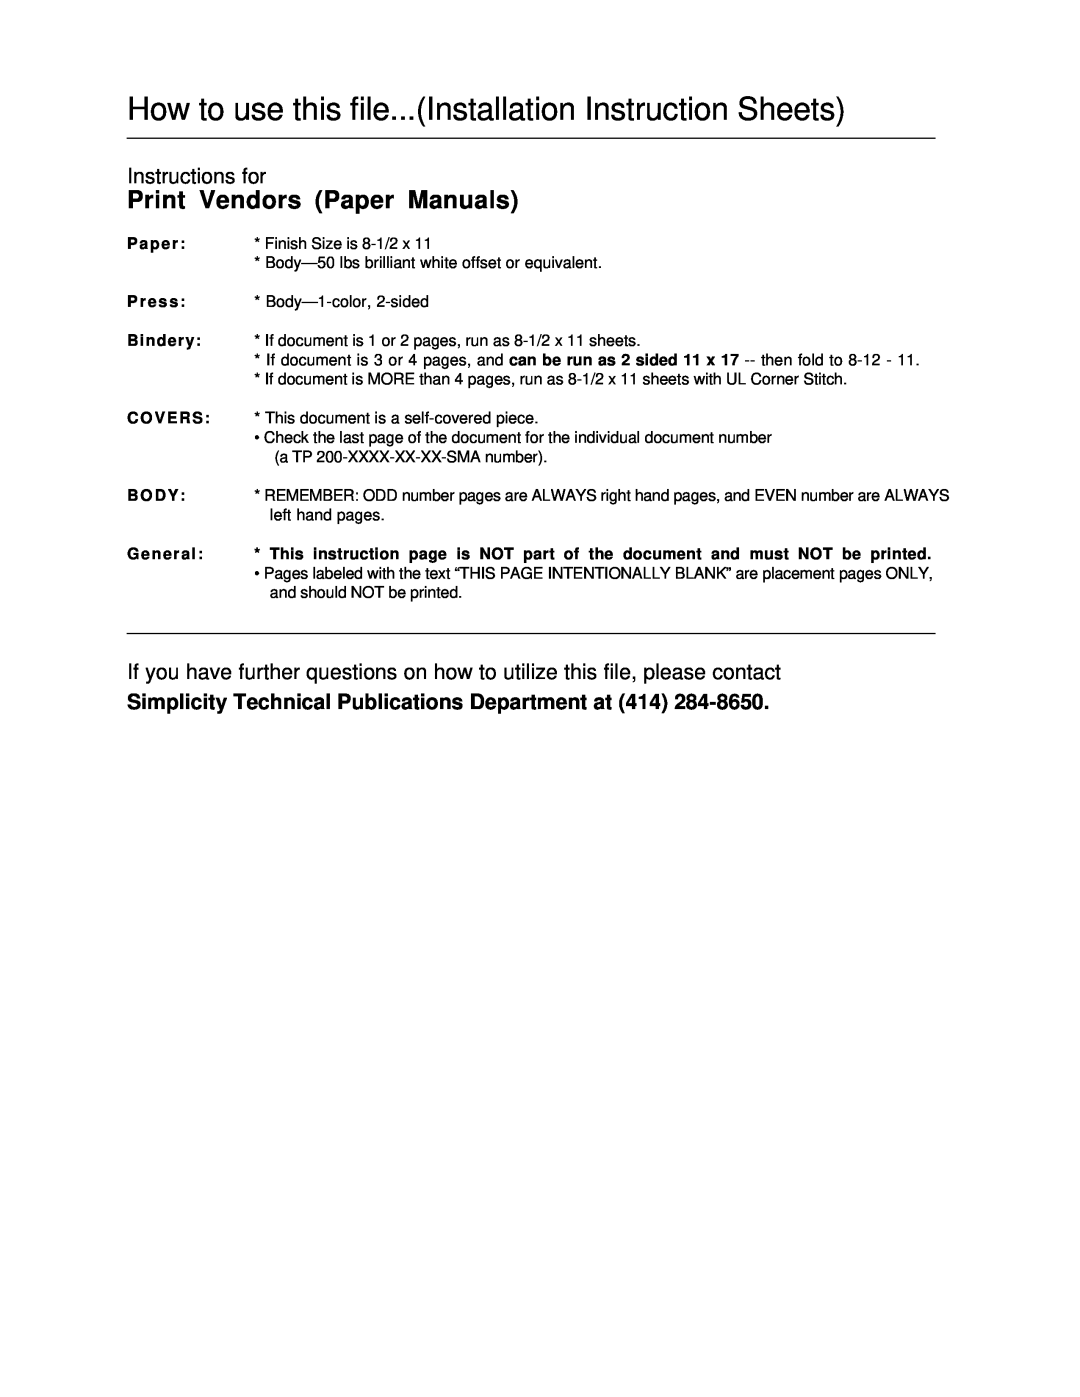 Simplicity TP 200-2121-01-SK-S installation instructions Print Vendors Paper Manuals, Instructions for, C O V E R S 